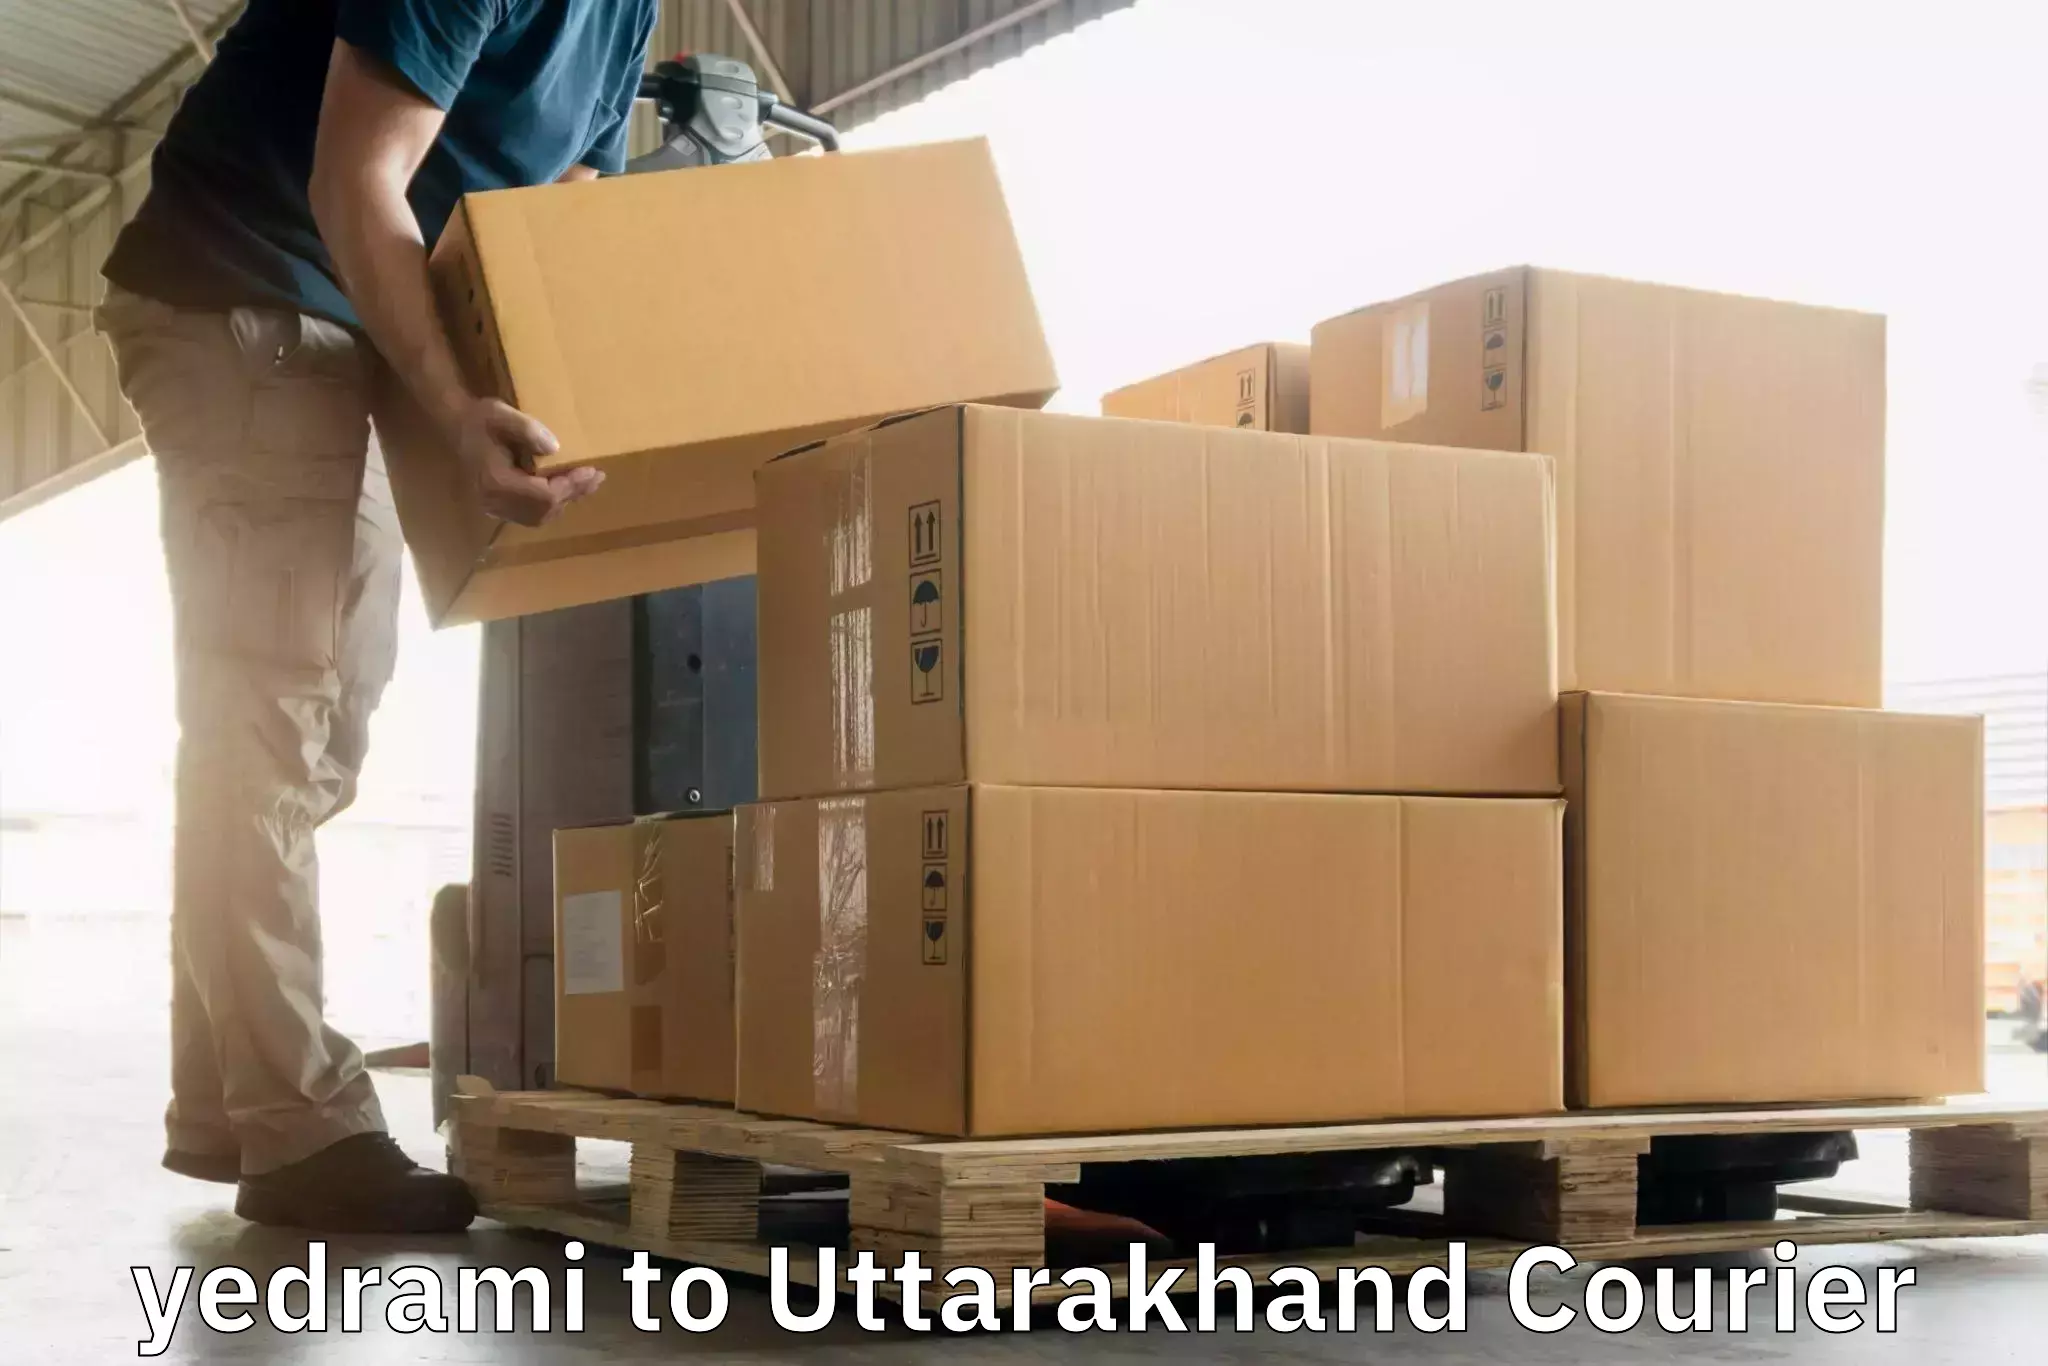 Next day courier yedrami to Uttarakhand